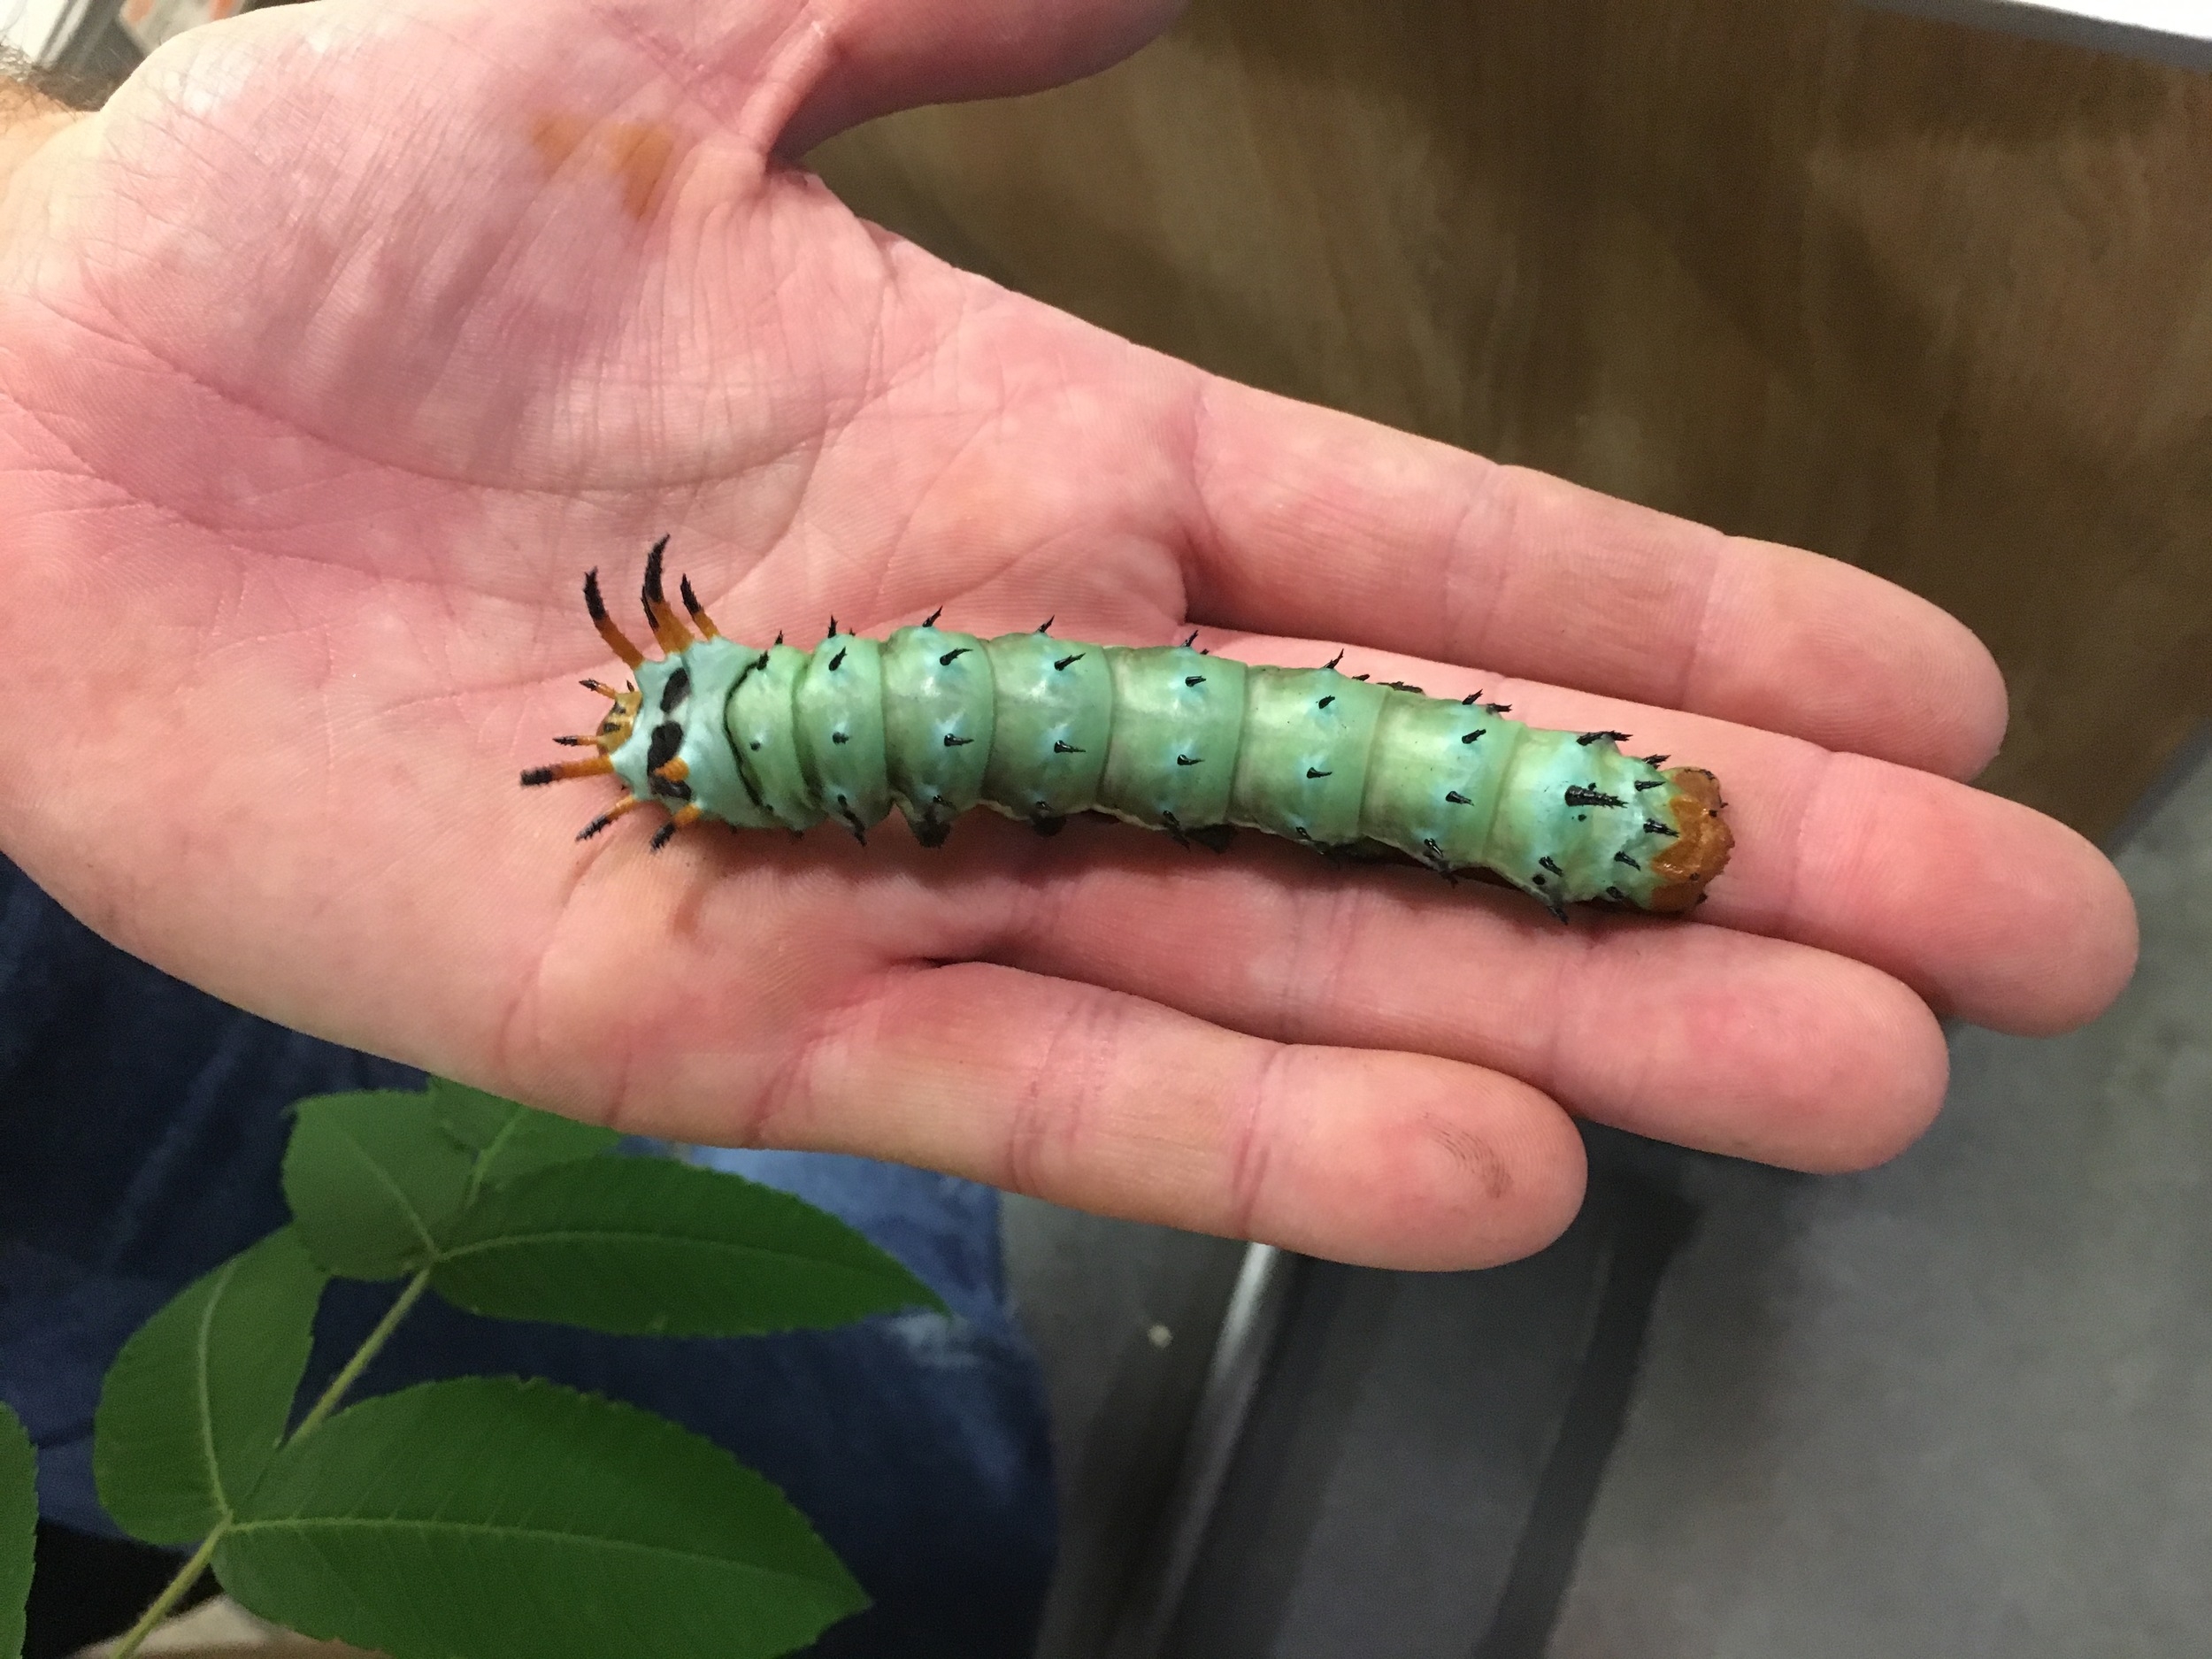 That's one juicy caterpillar. 